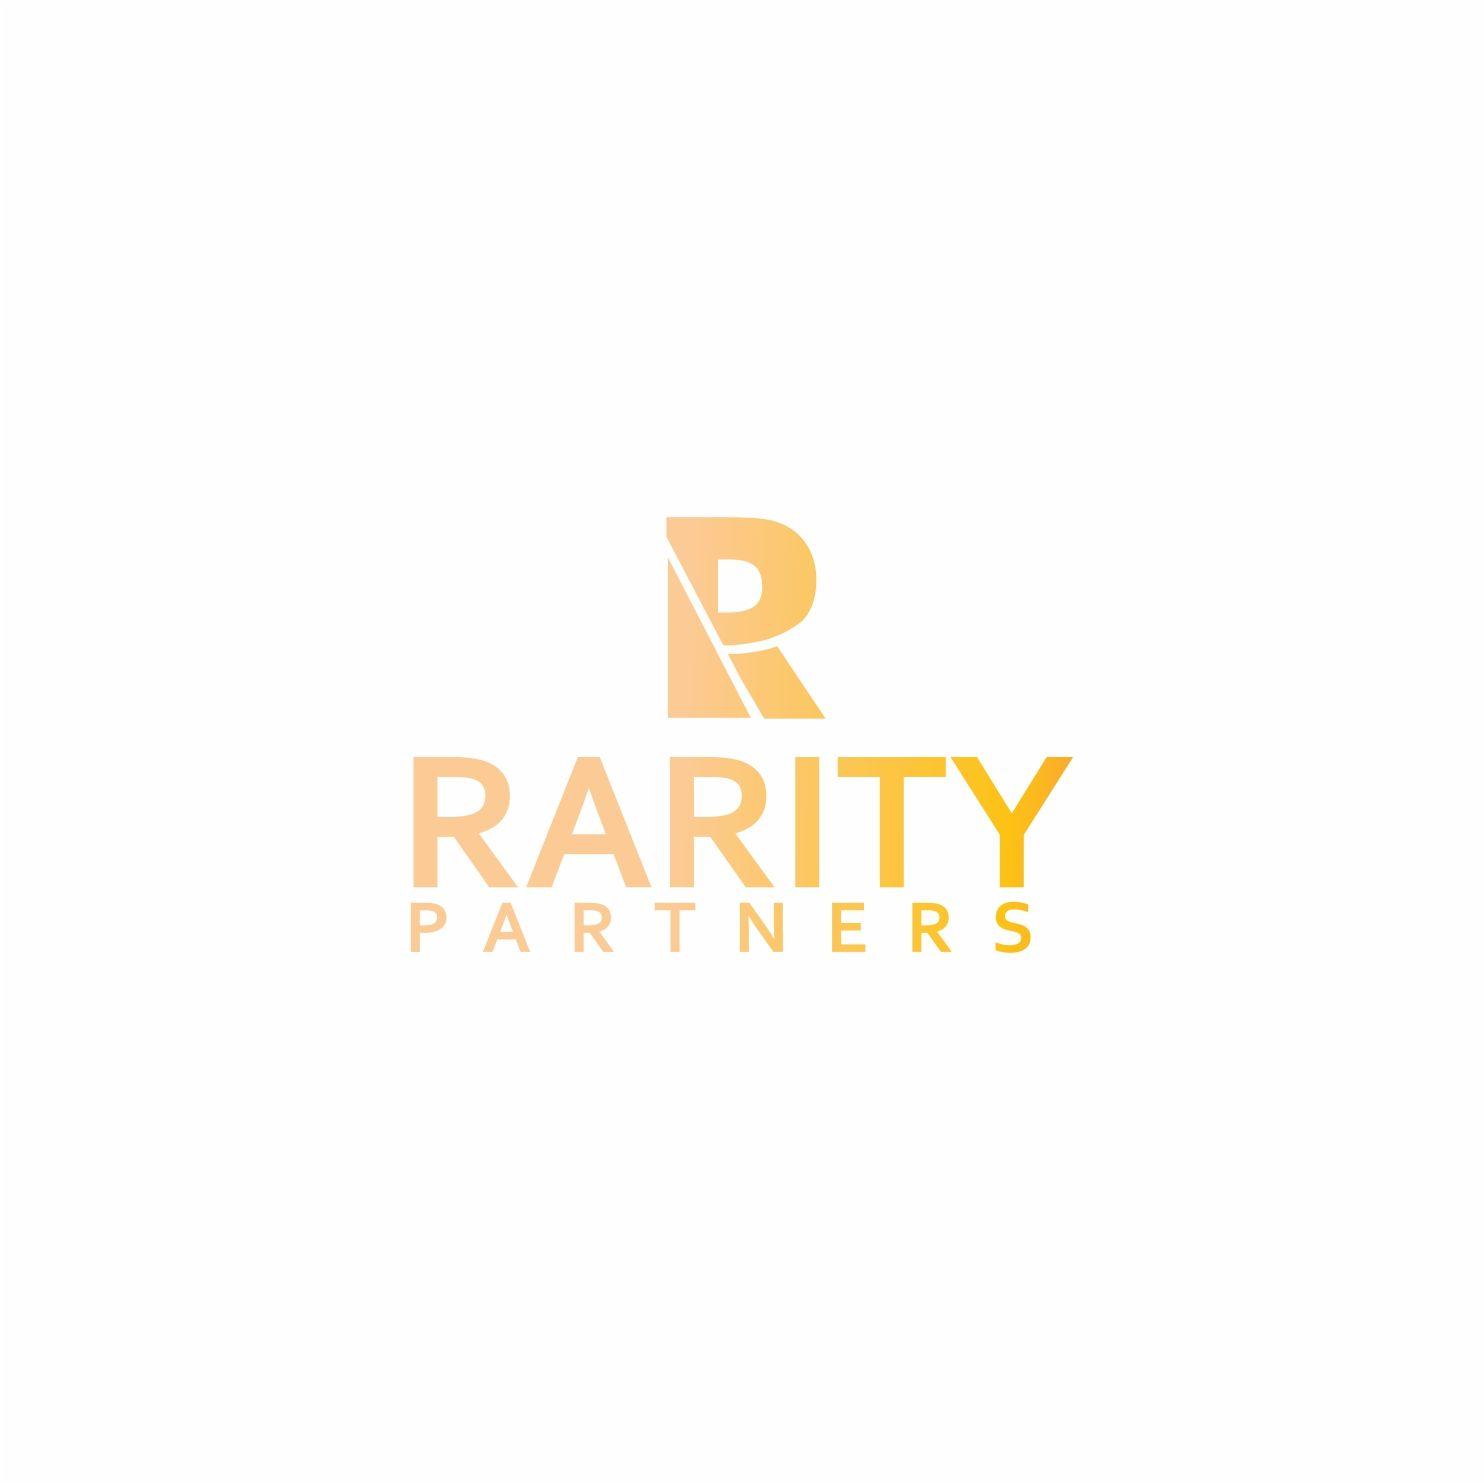 Rarity Logo - Upmarket, Professional, Venture Capital Logo Design for Rarity ...